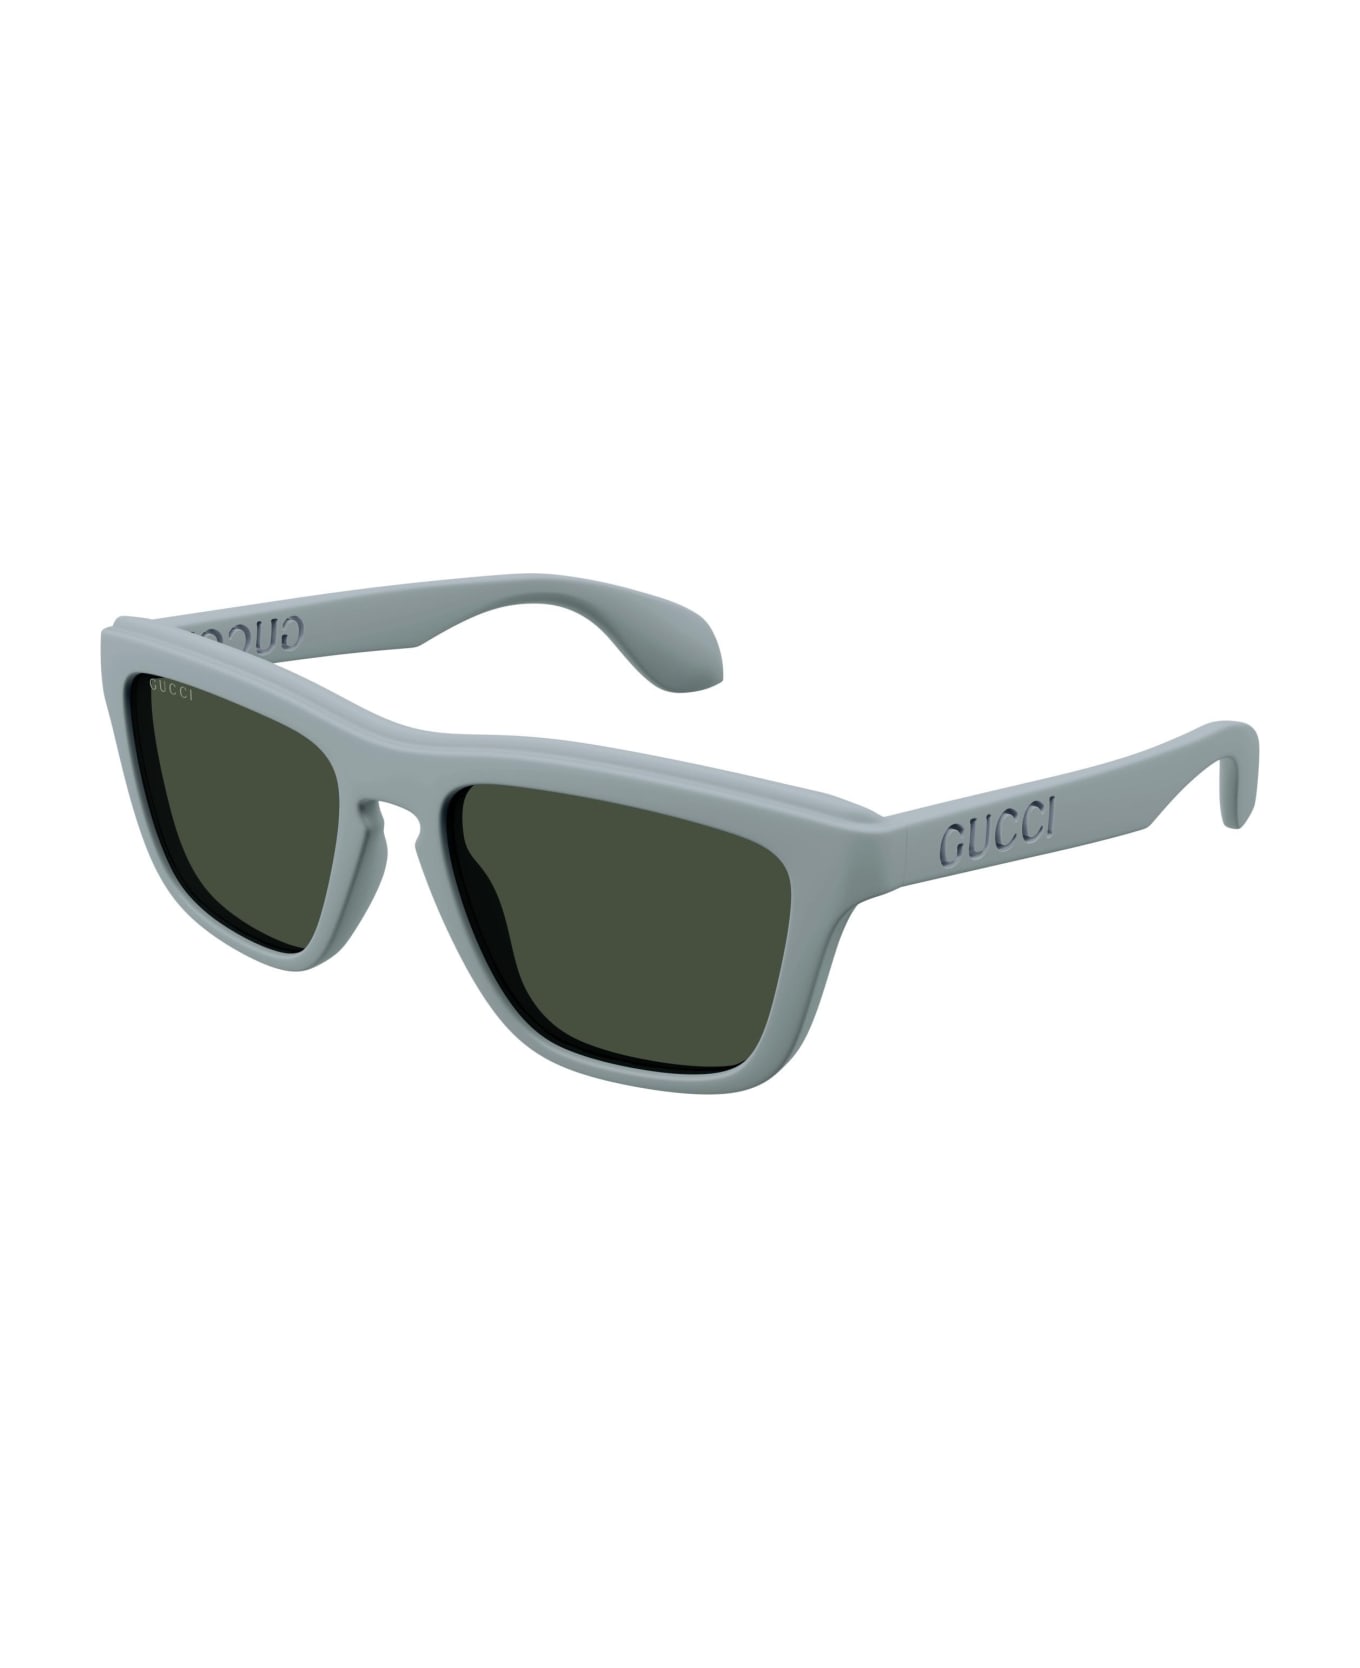 Gucci Eyewear Sunglasses - Azzurro/Blu chiaro